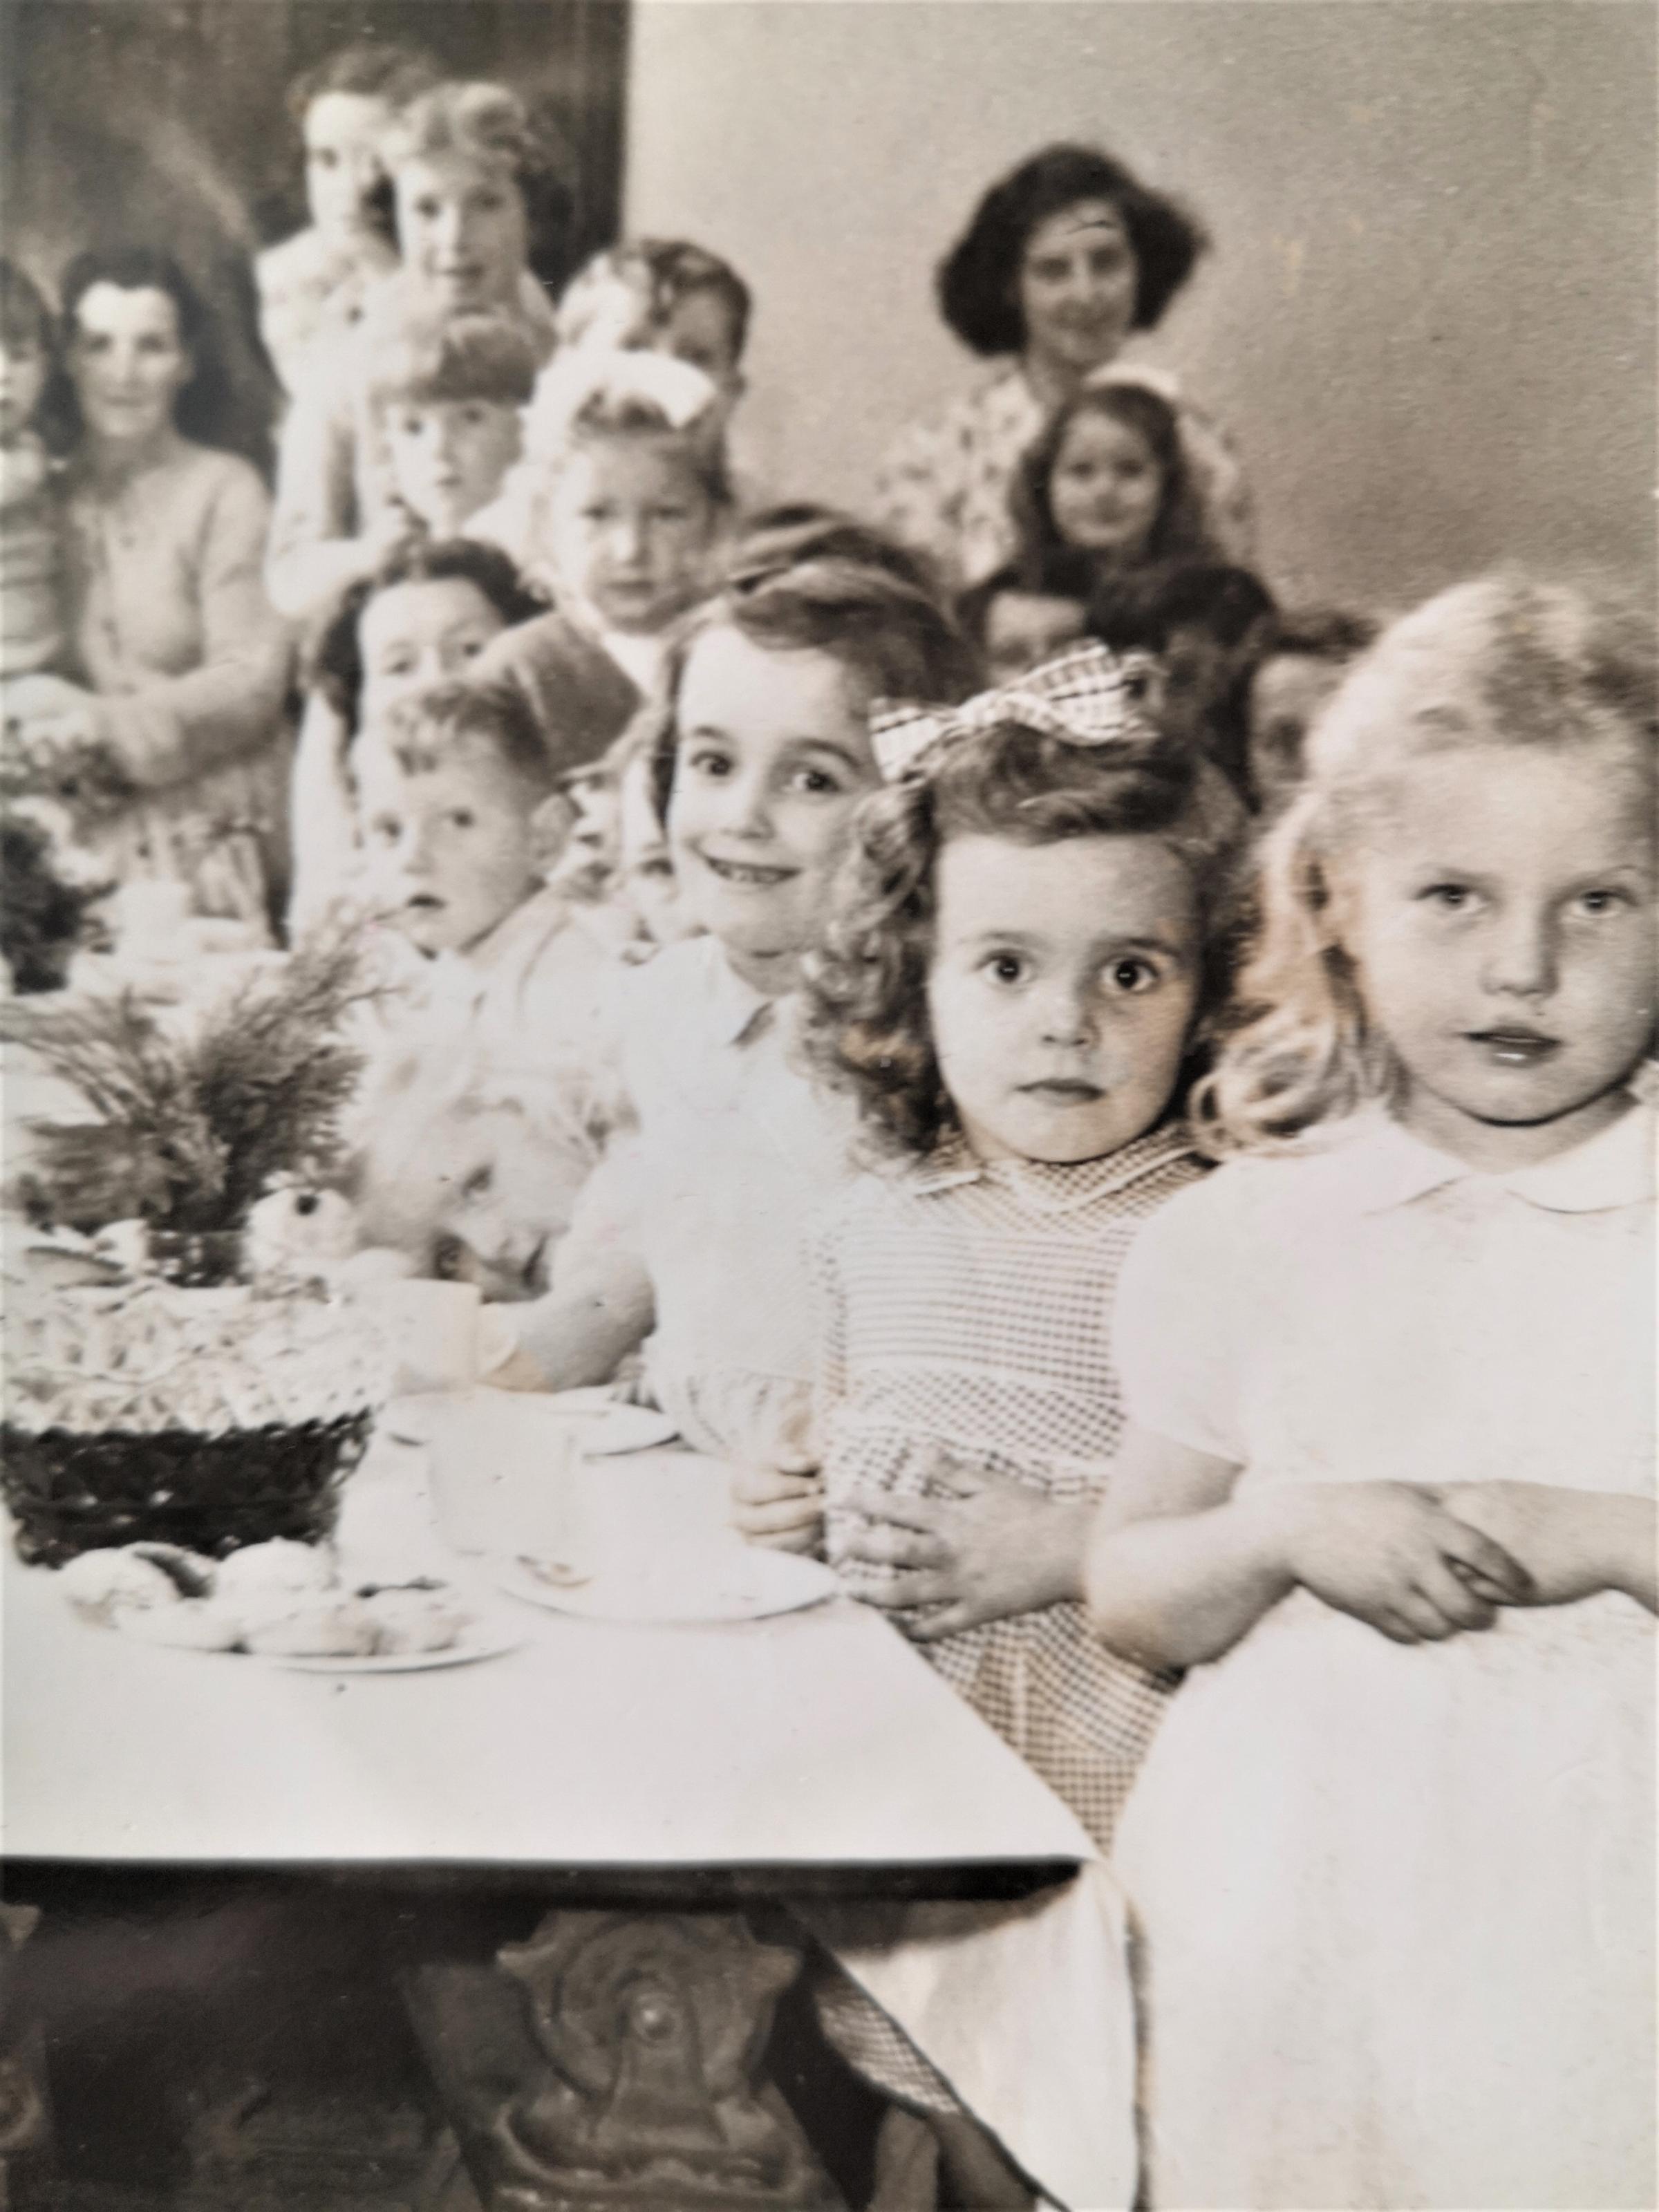 Queen Elizabeth Coronation celebrations at Parc Alun in Mold, 1953. Photo courtesy of Joan Evans